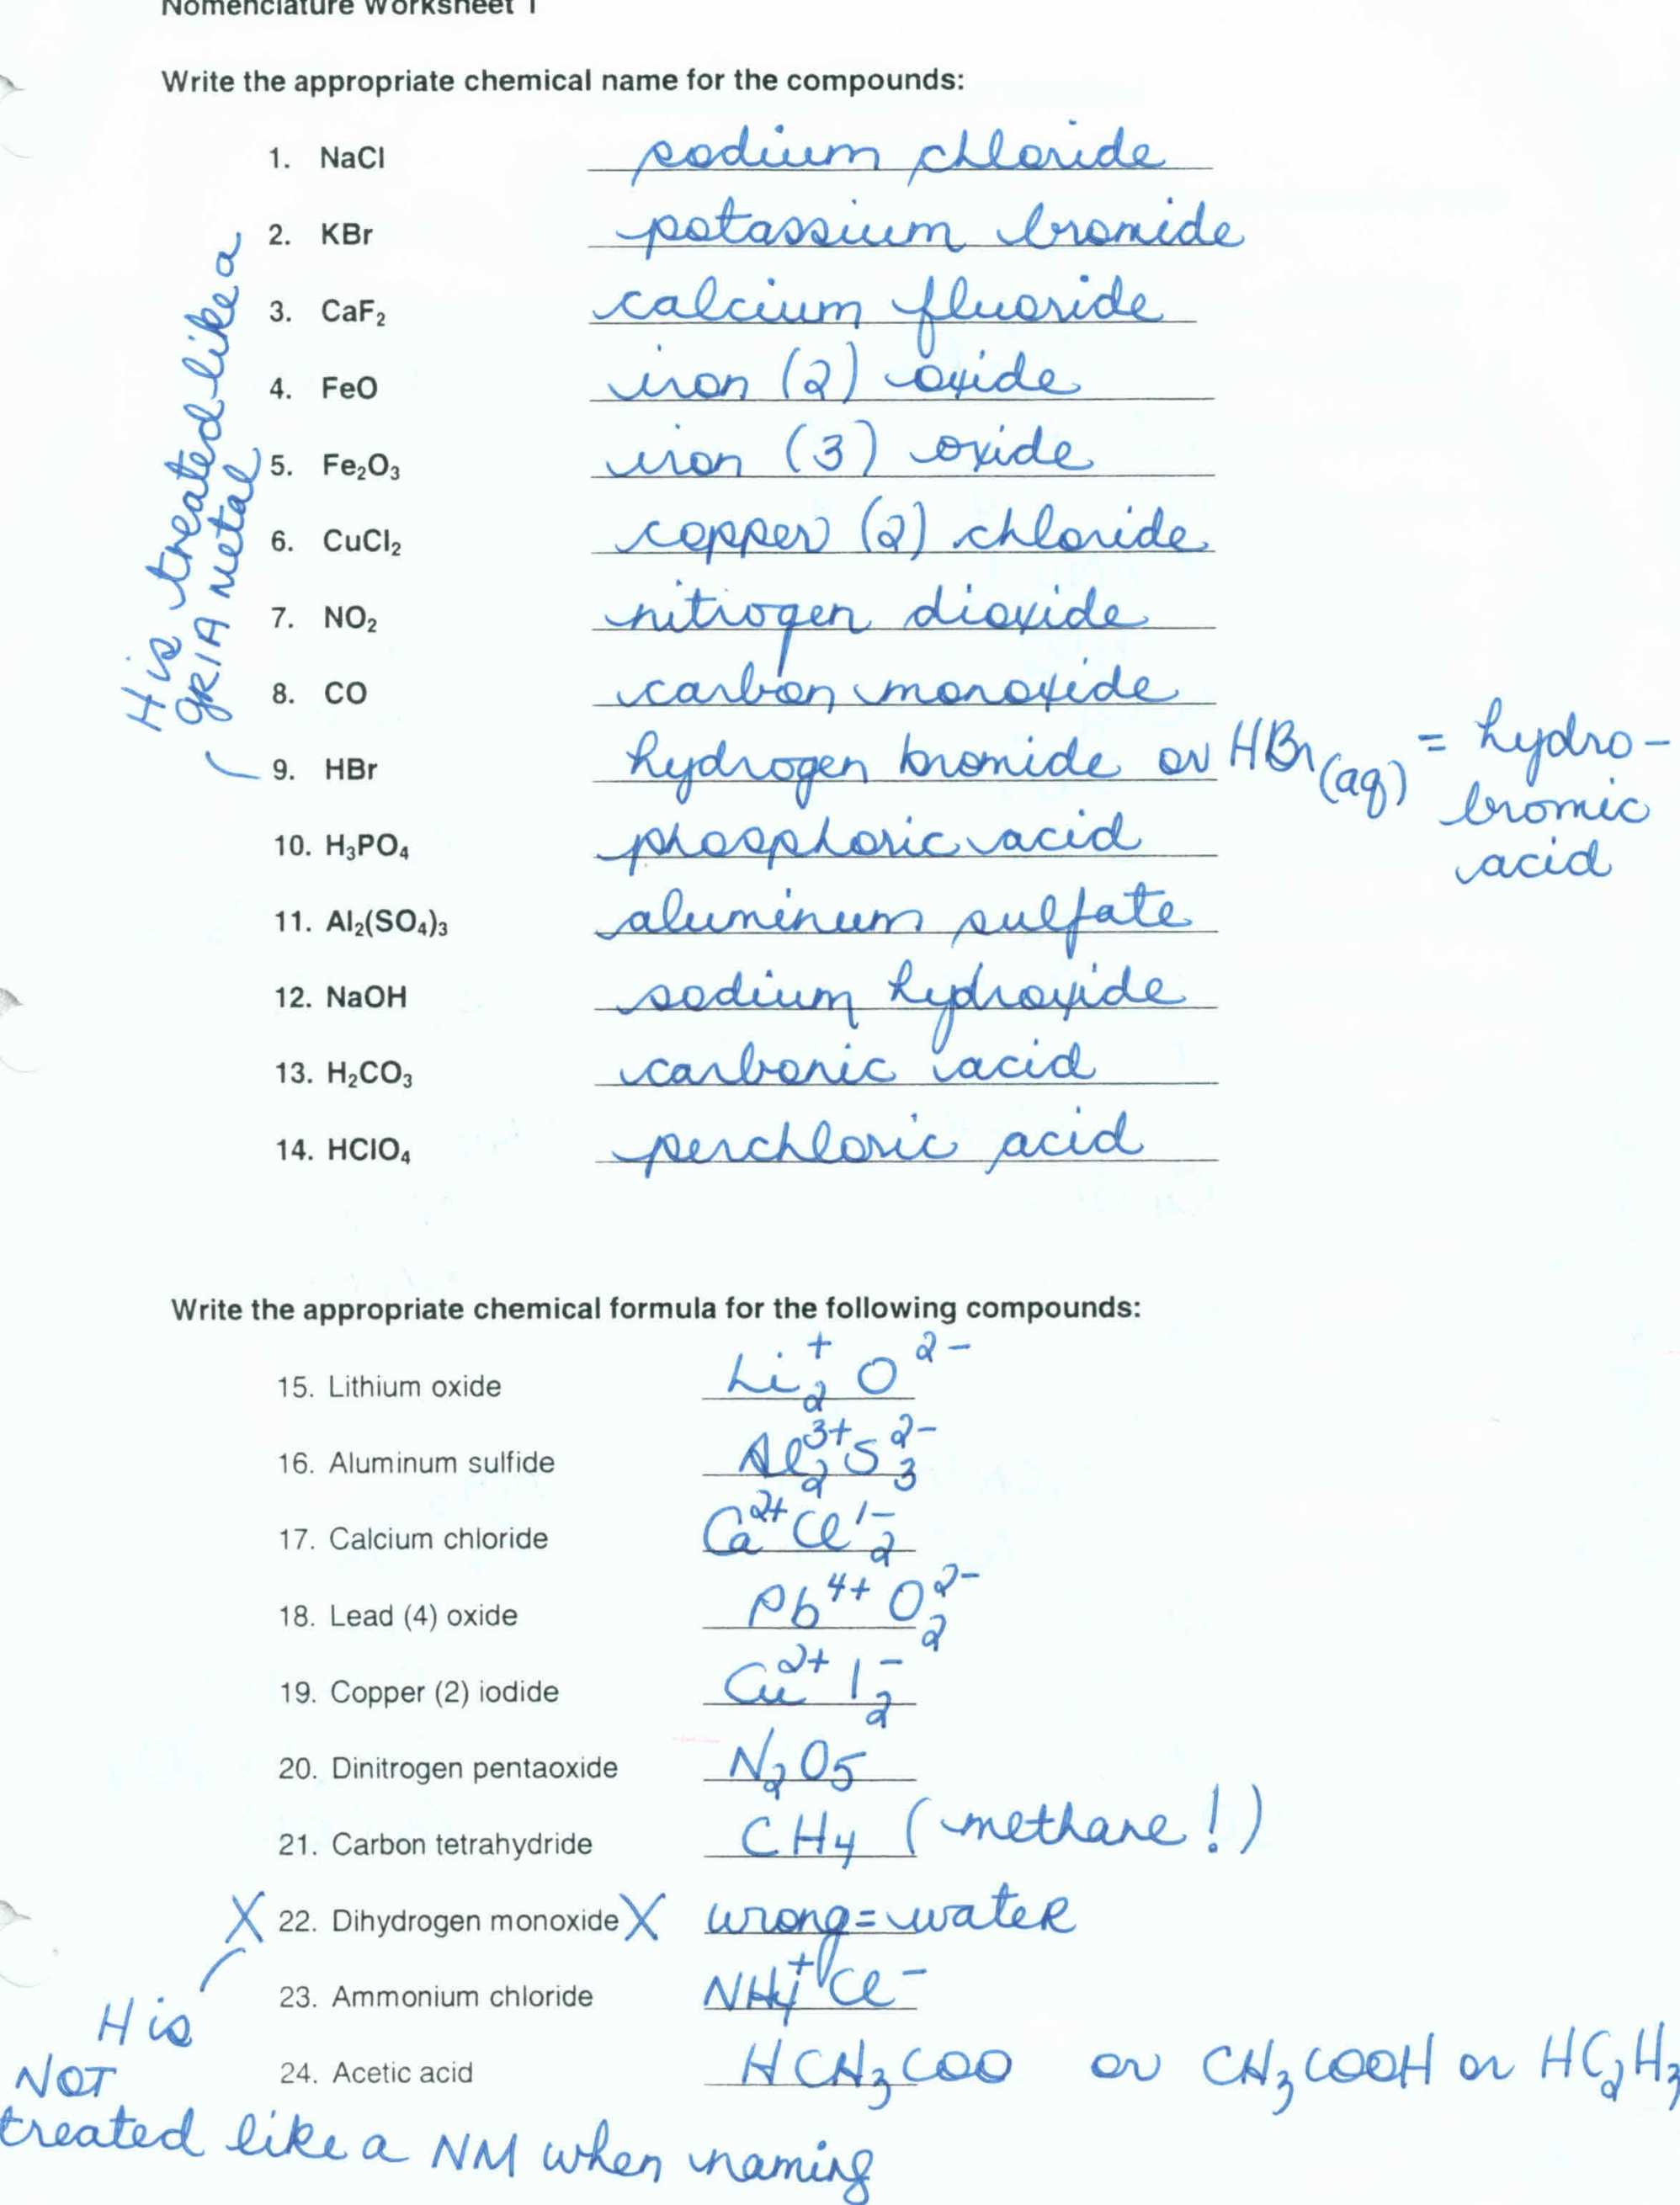 Acids and Bases Worksheet Answers together with Worksheet Acids and Bases Worksheet Answers Inspiration Acids